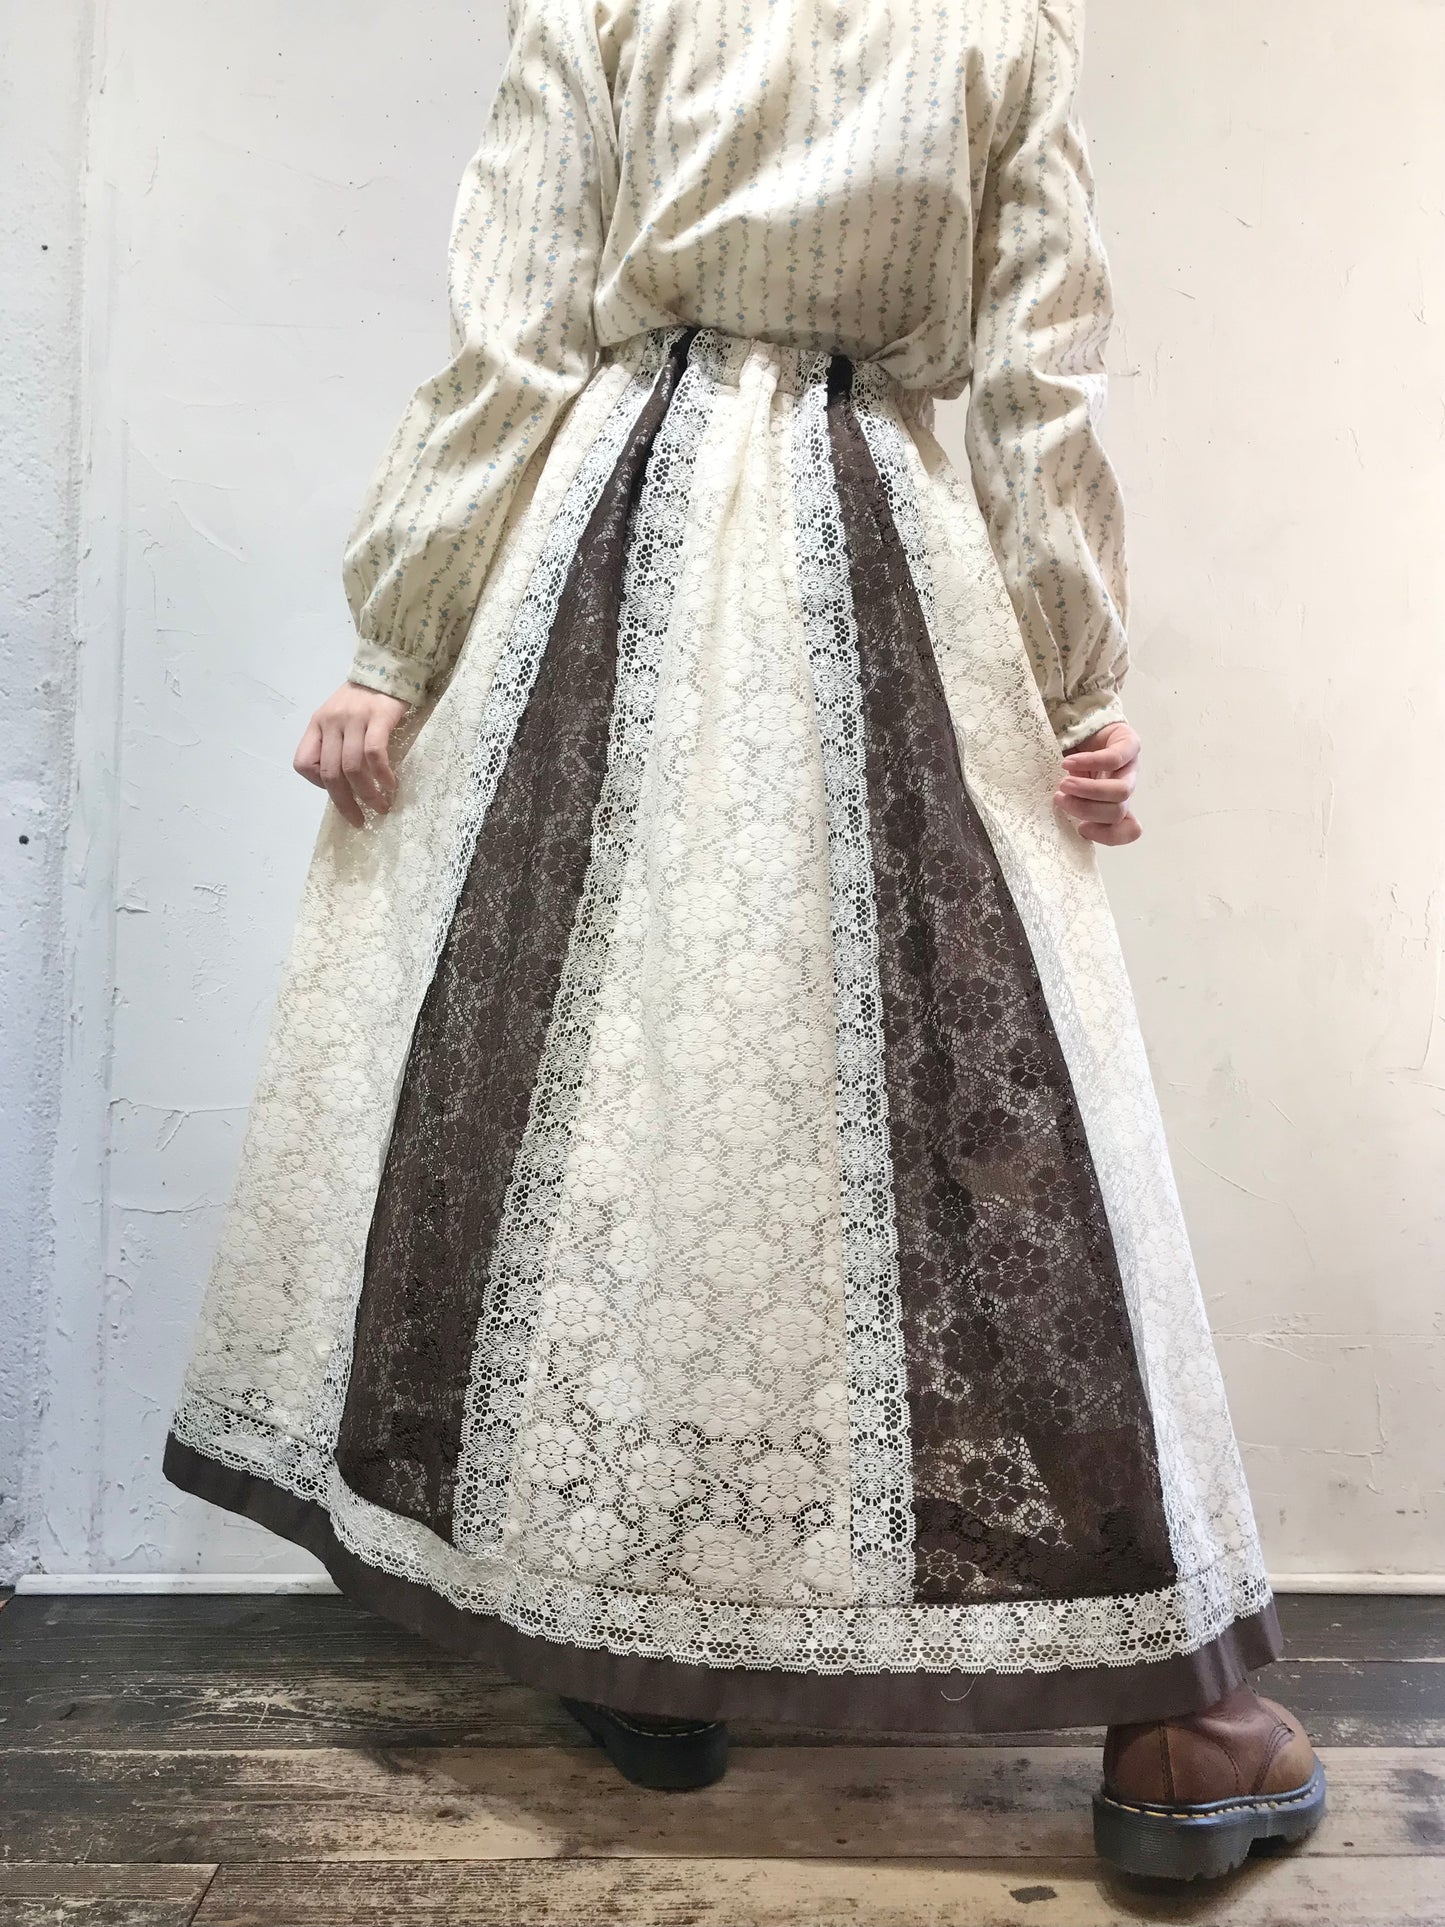 ’70s Vintage Patchwork Skirt [A26064]